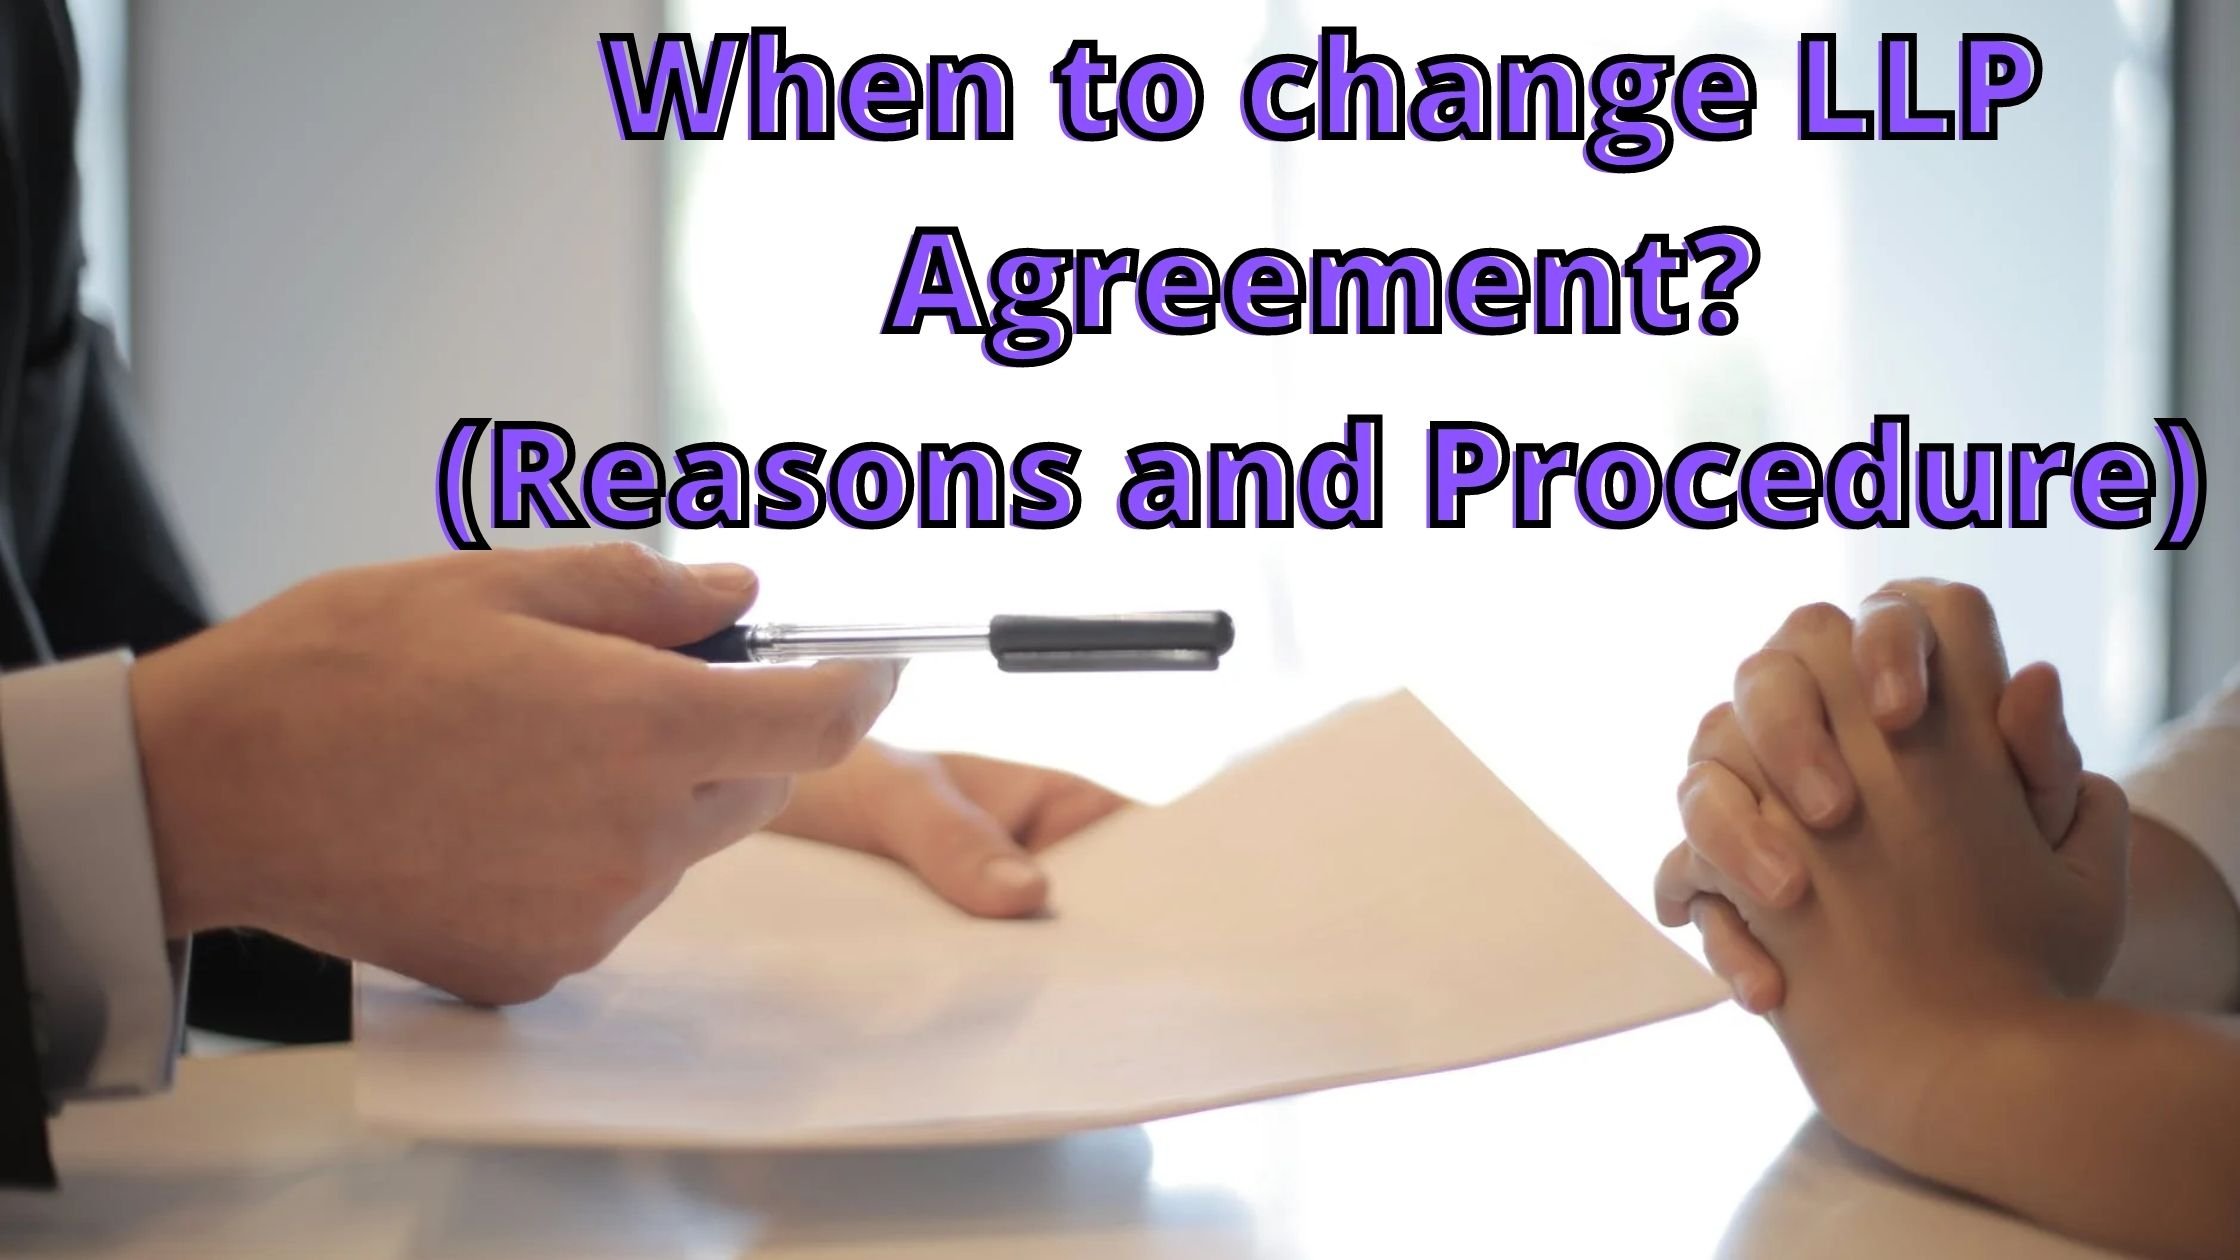 Change LLP Agreement